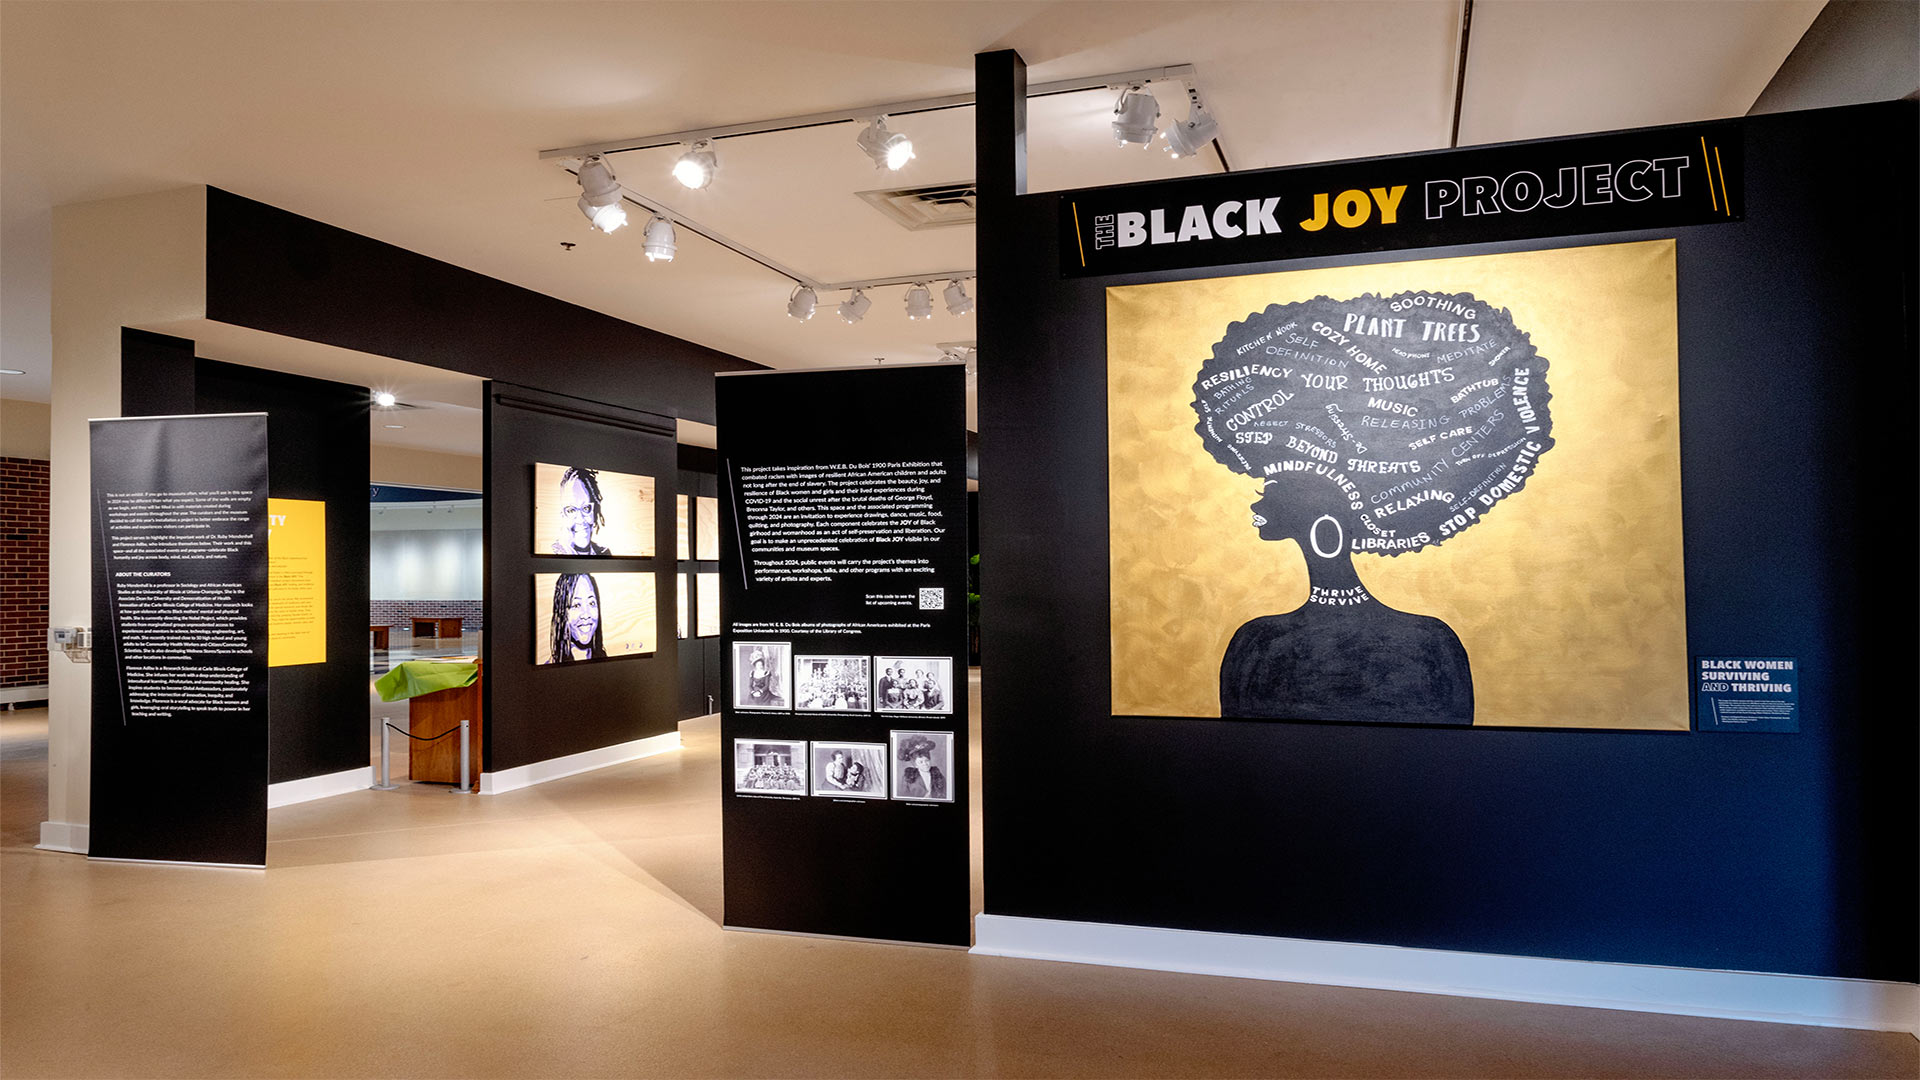 Black Joy Project overview